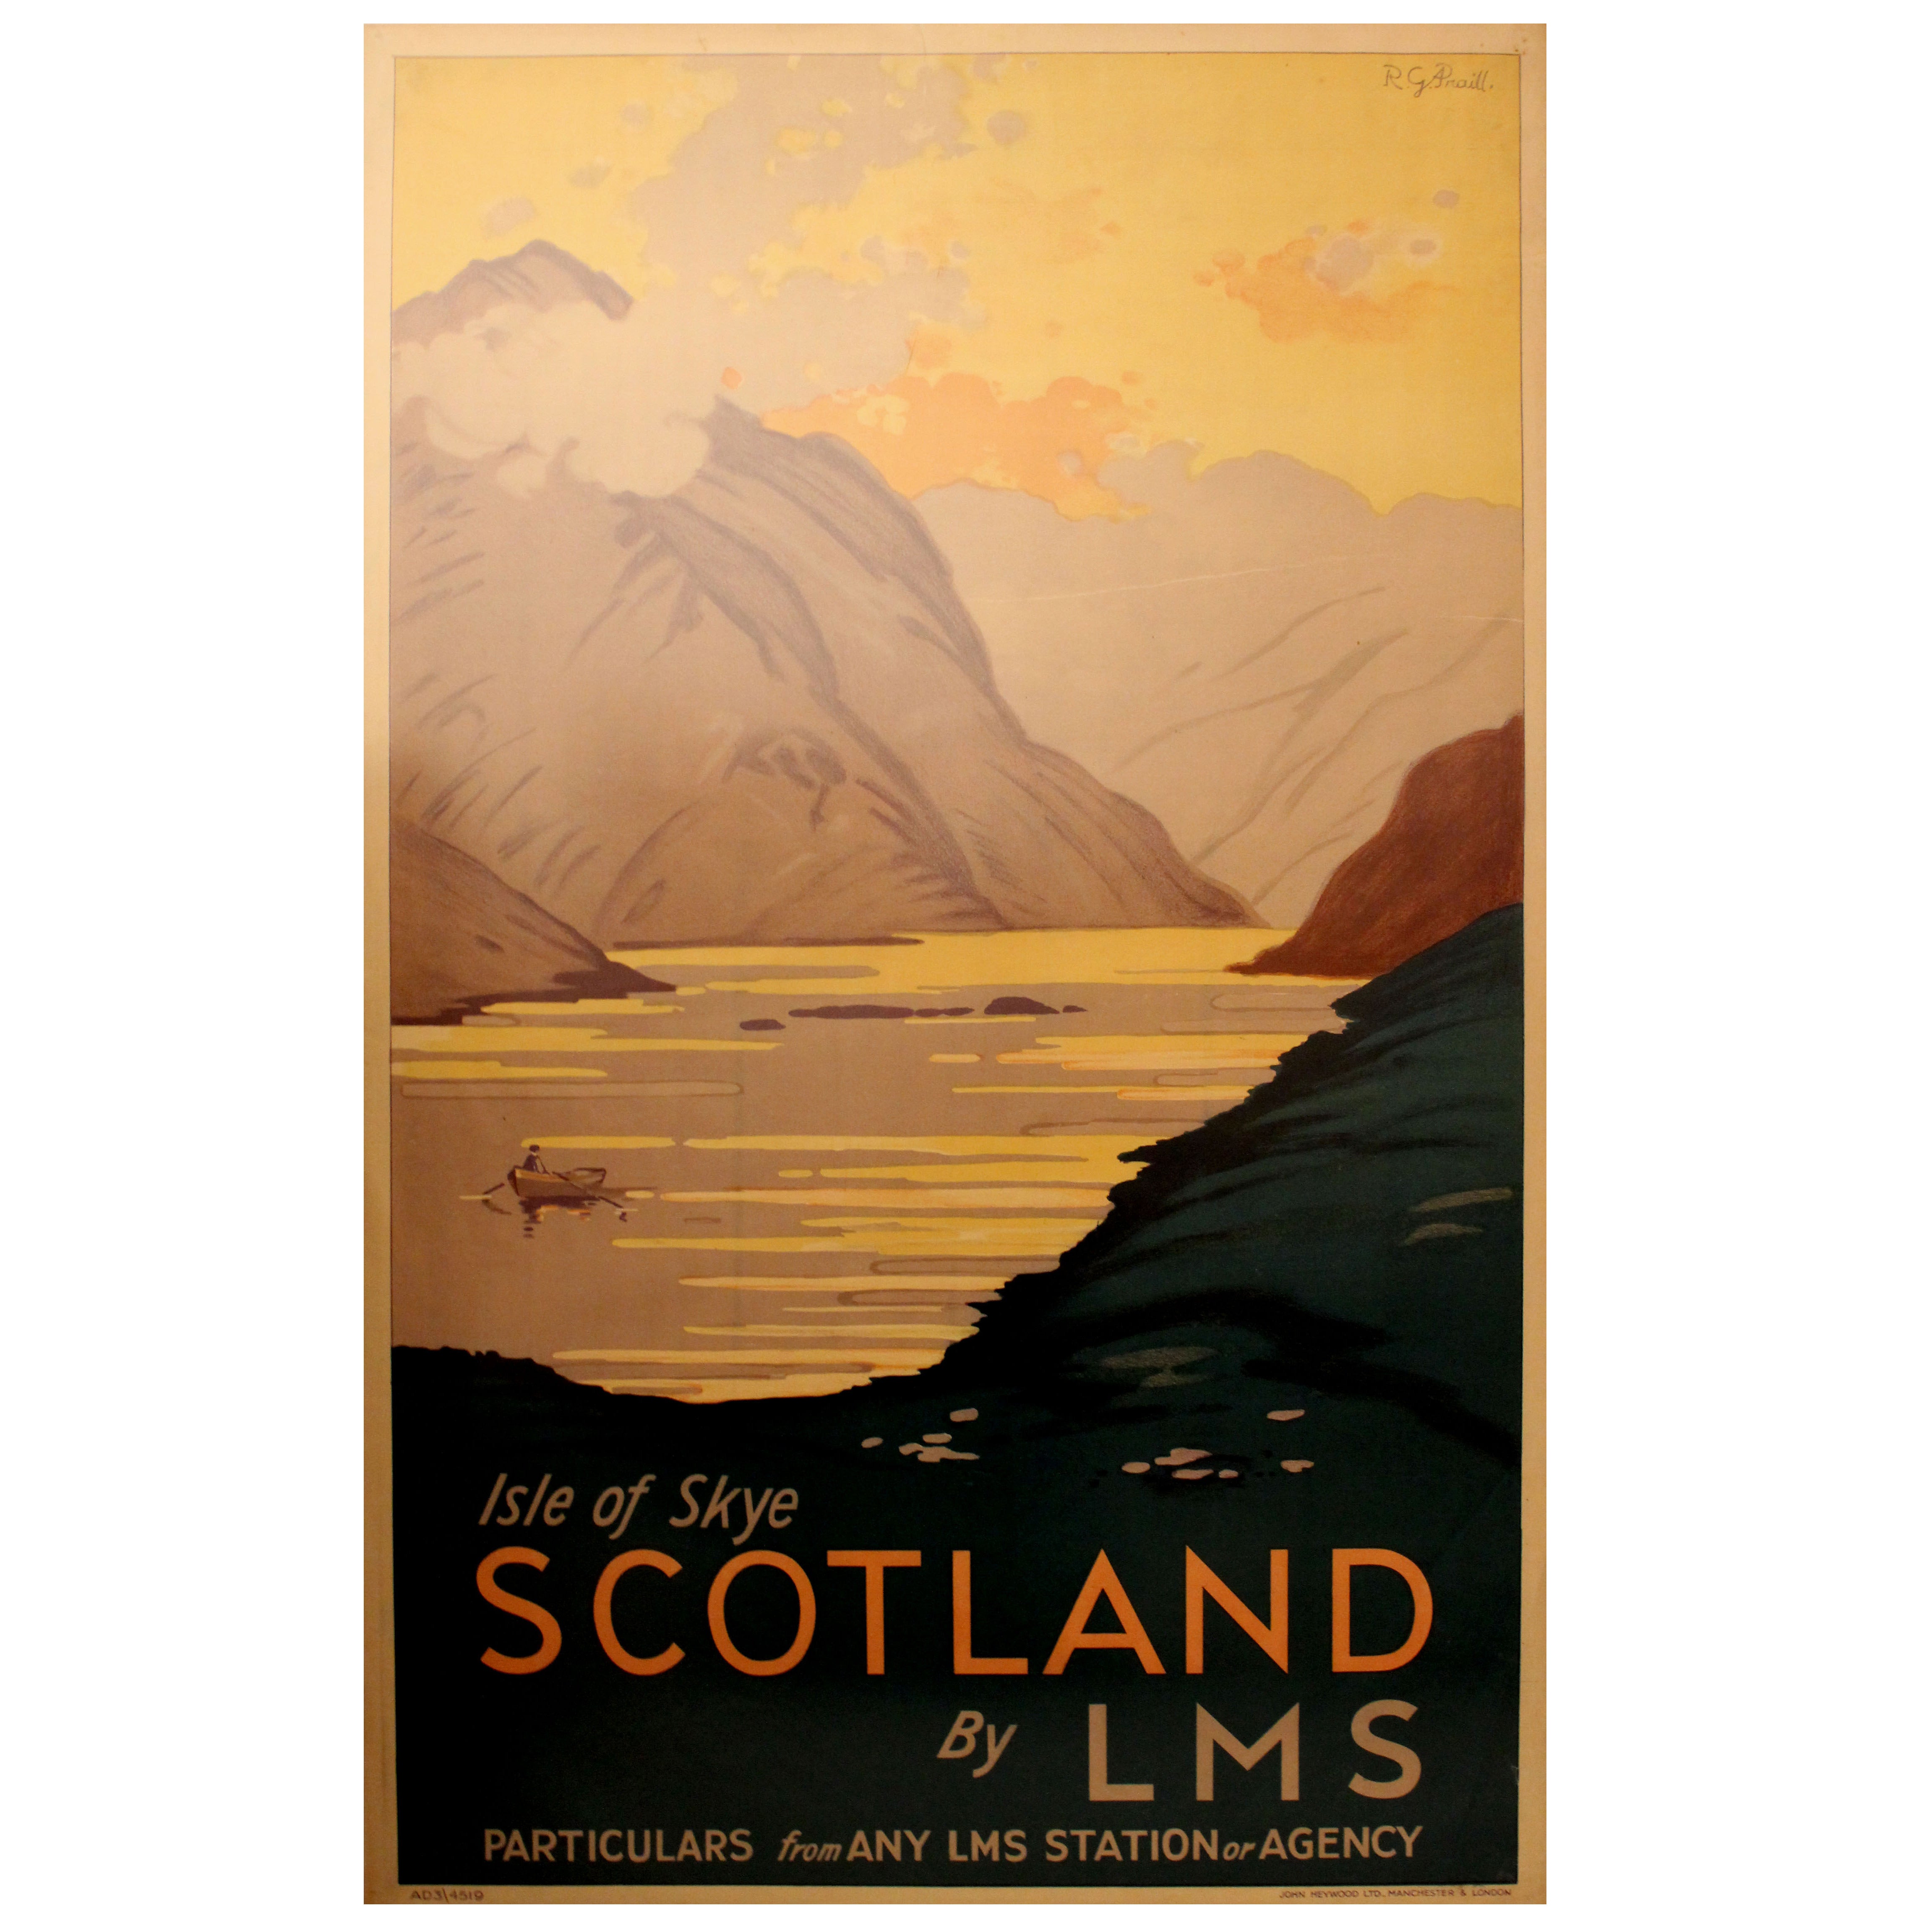 Original 1930s LMS Railway Travel Poster by RG Praill "Isle of Skye Scotland"